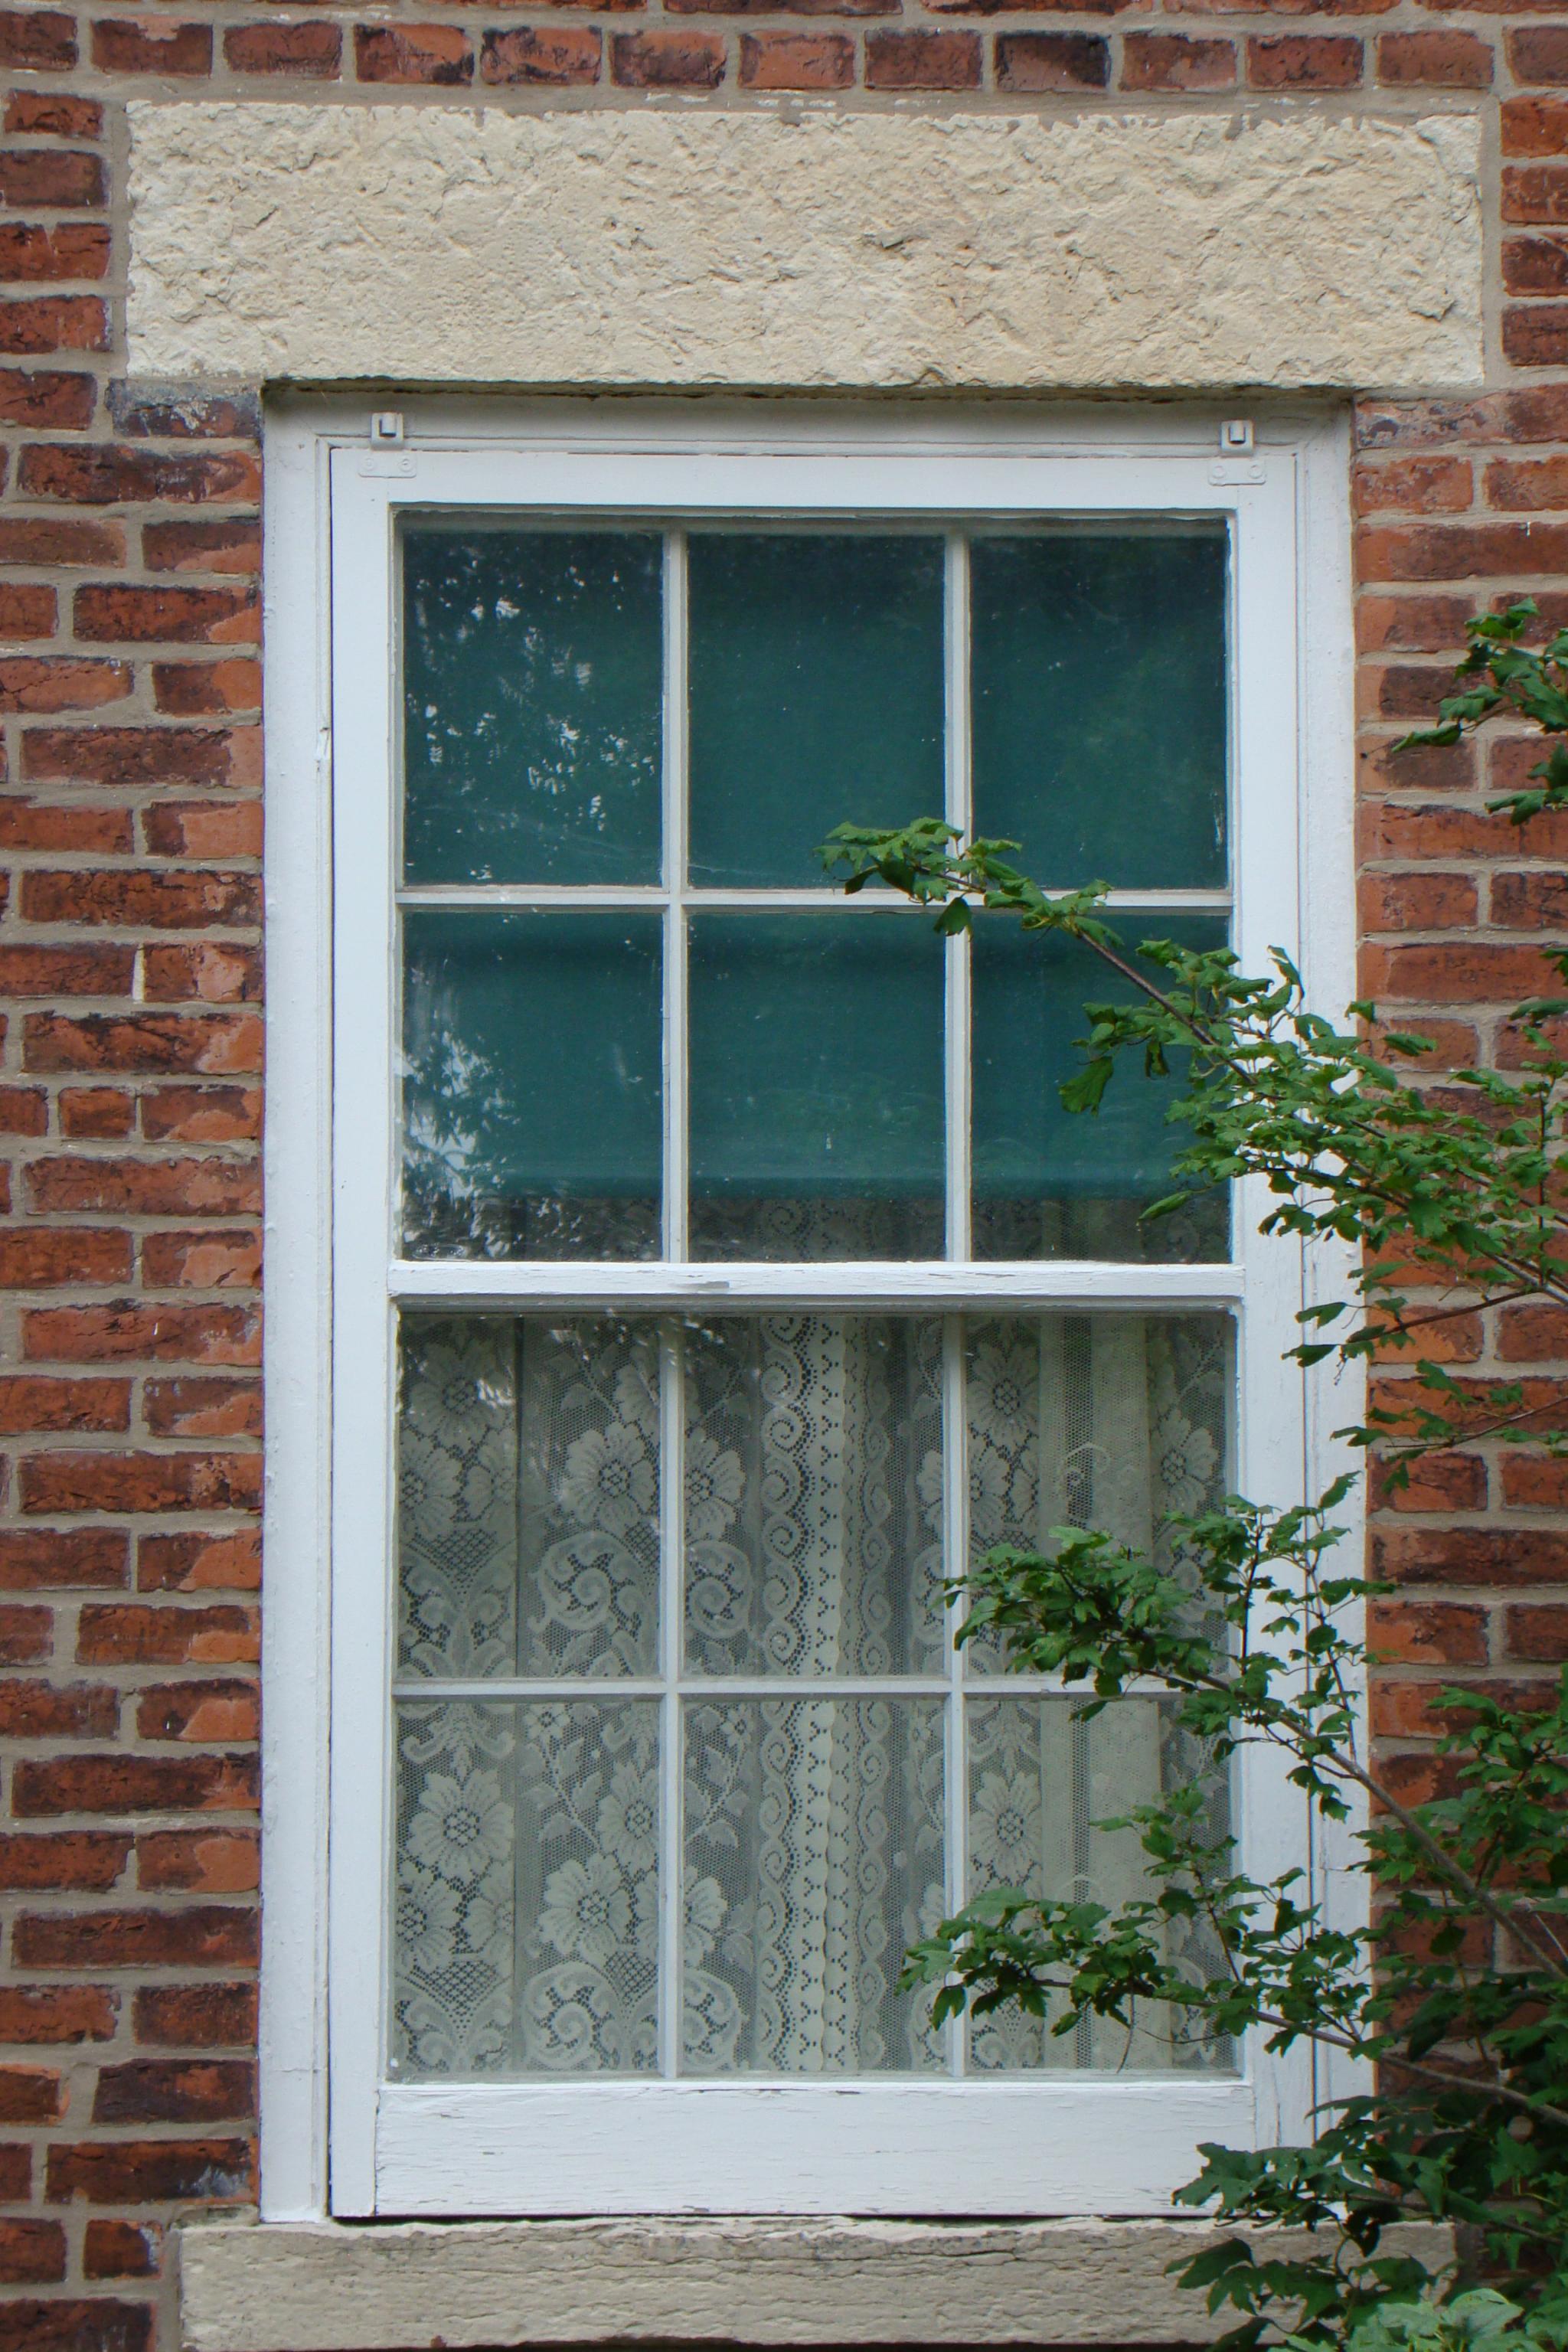 Decorative pediment above Halfway House window